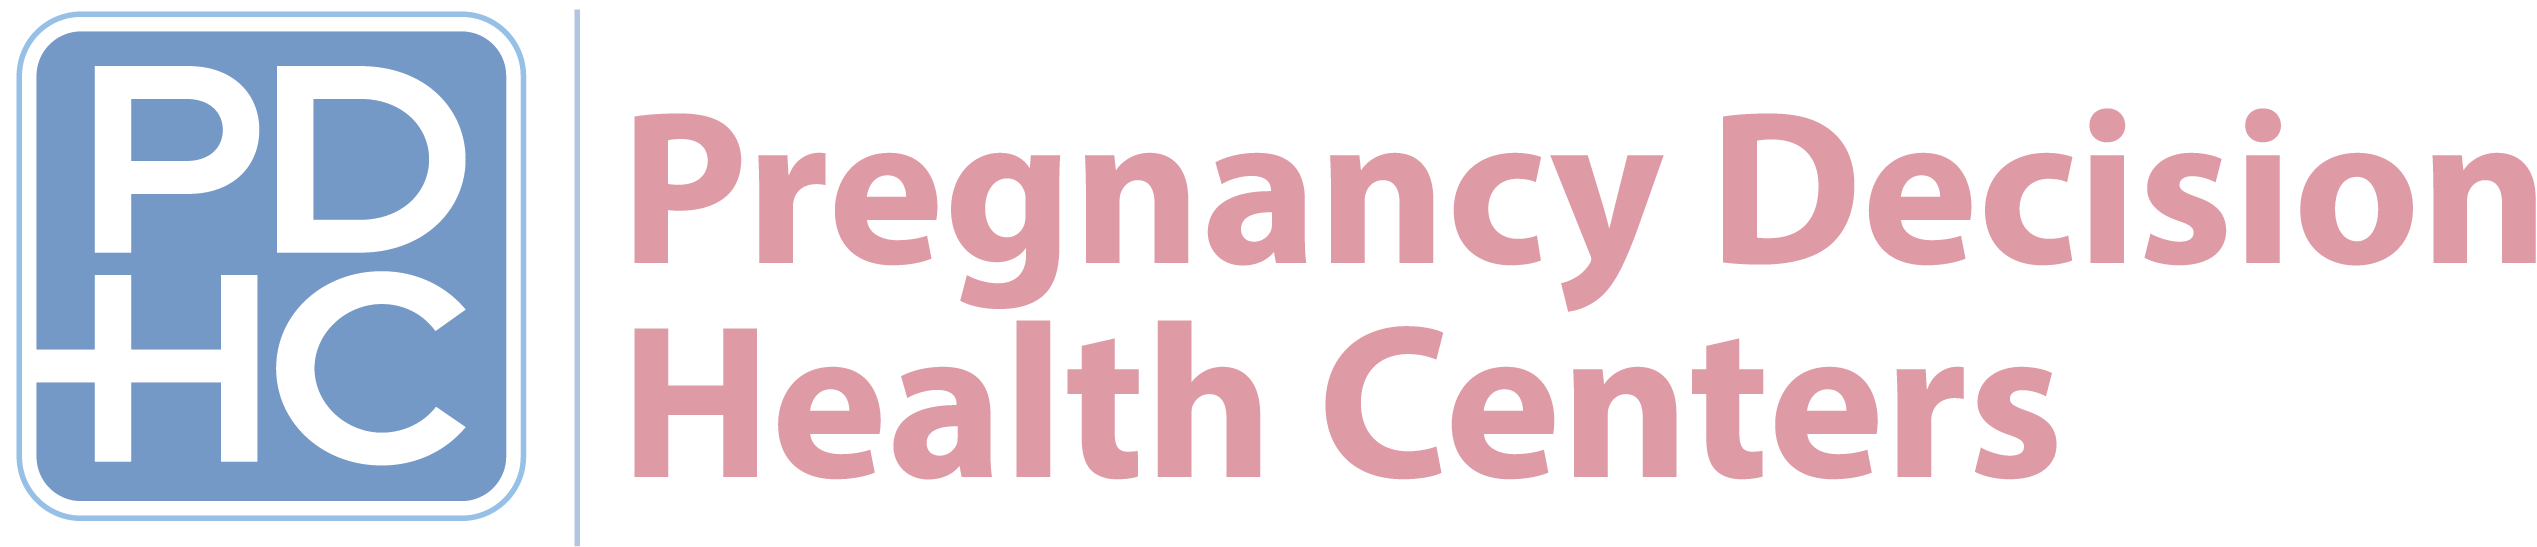 Pregnancy Decision Health Centers logo